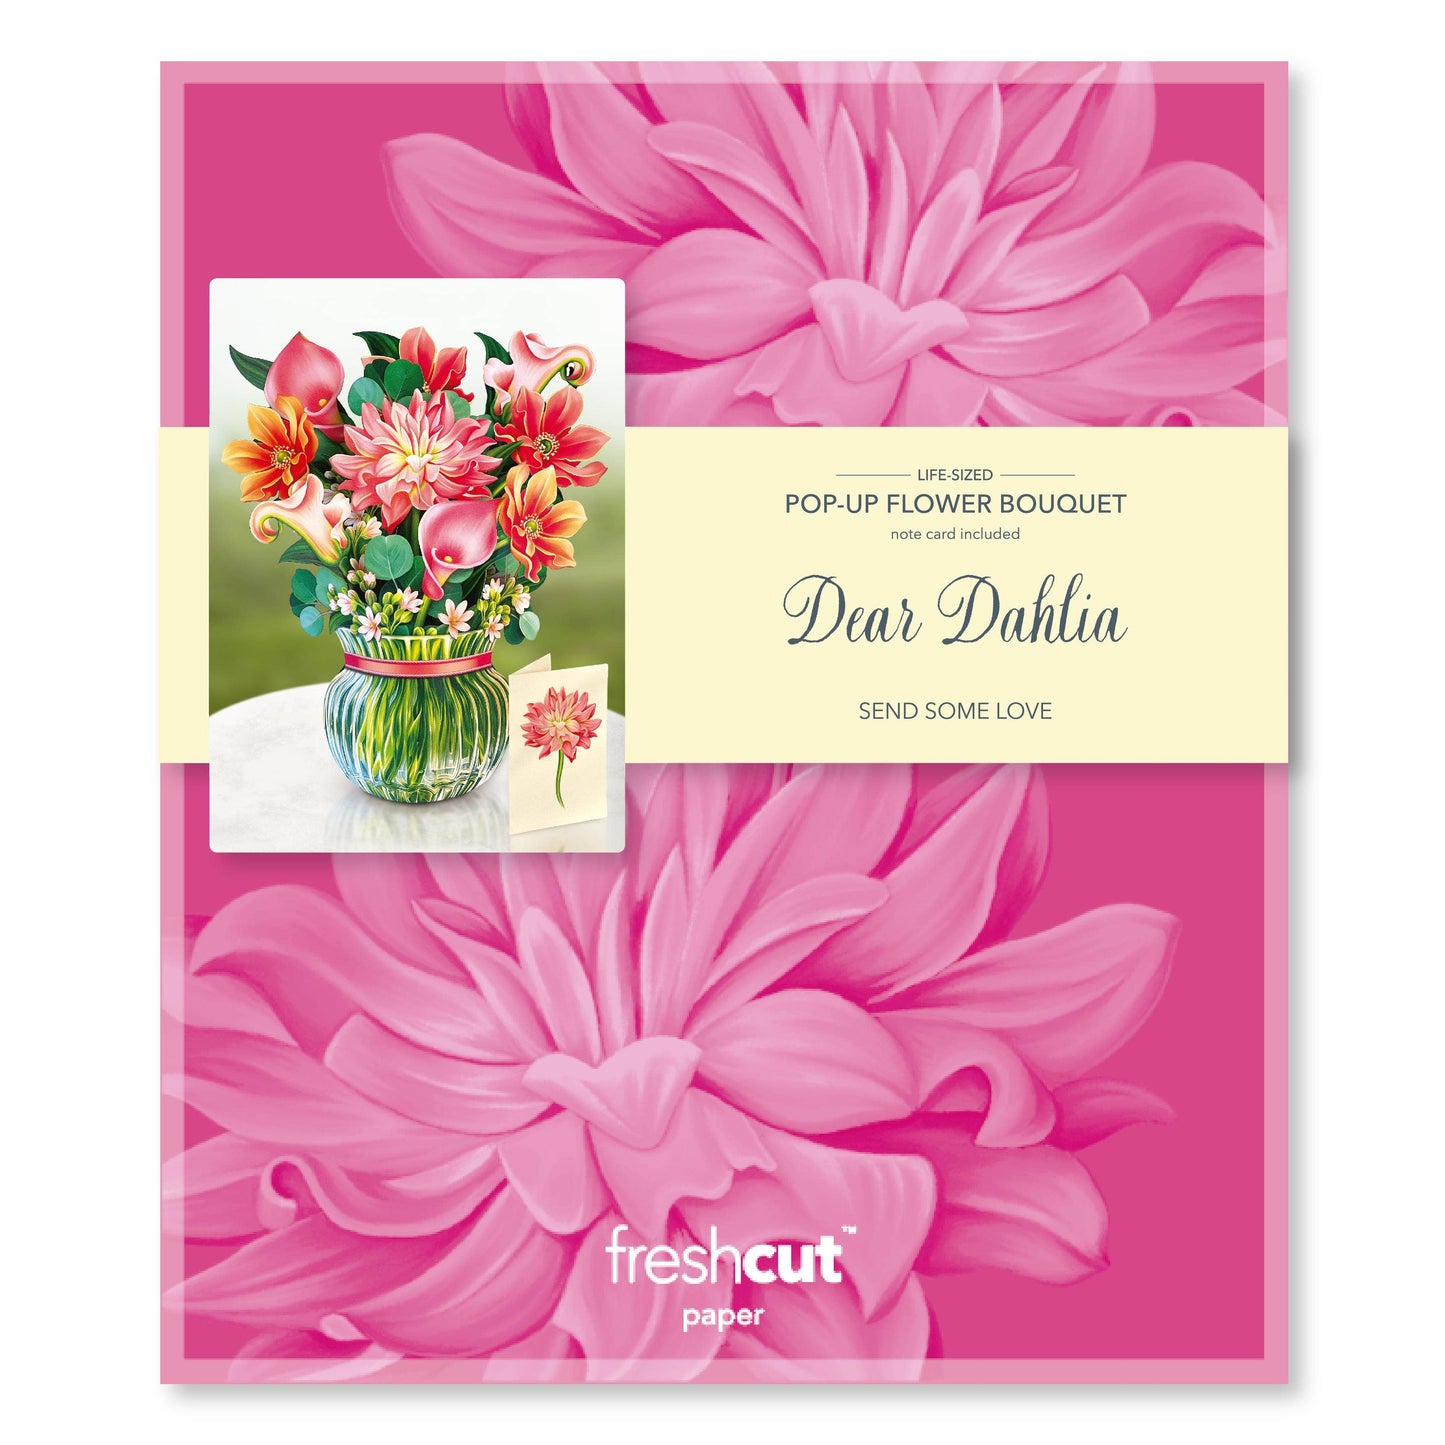 Dear Dahlia Pop-up Greeting Card